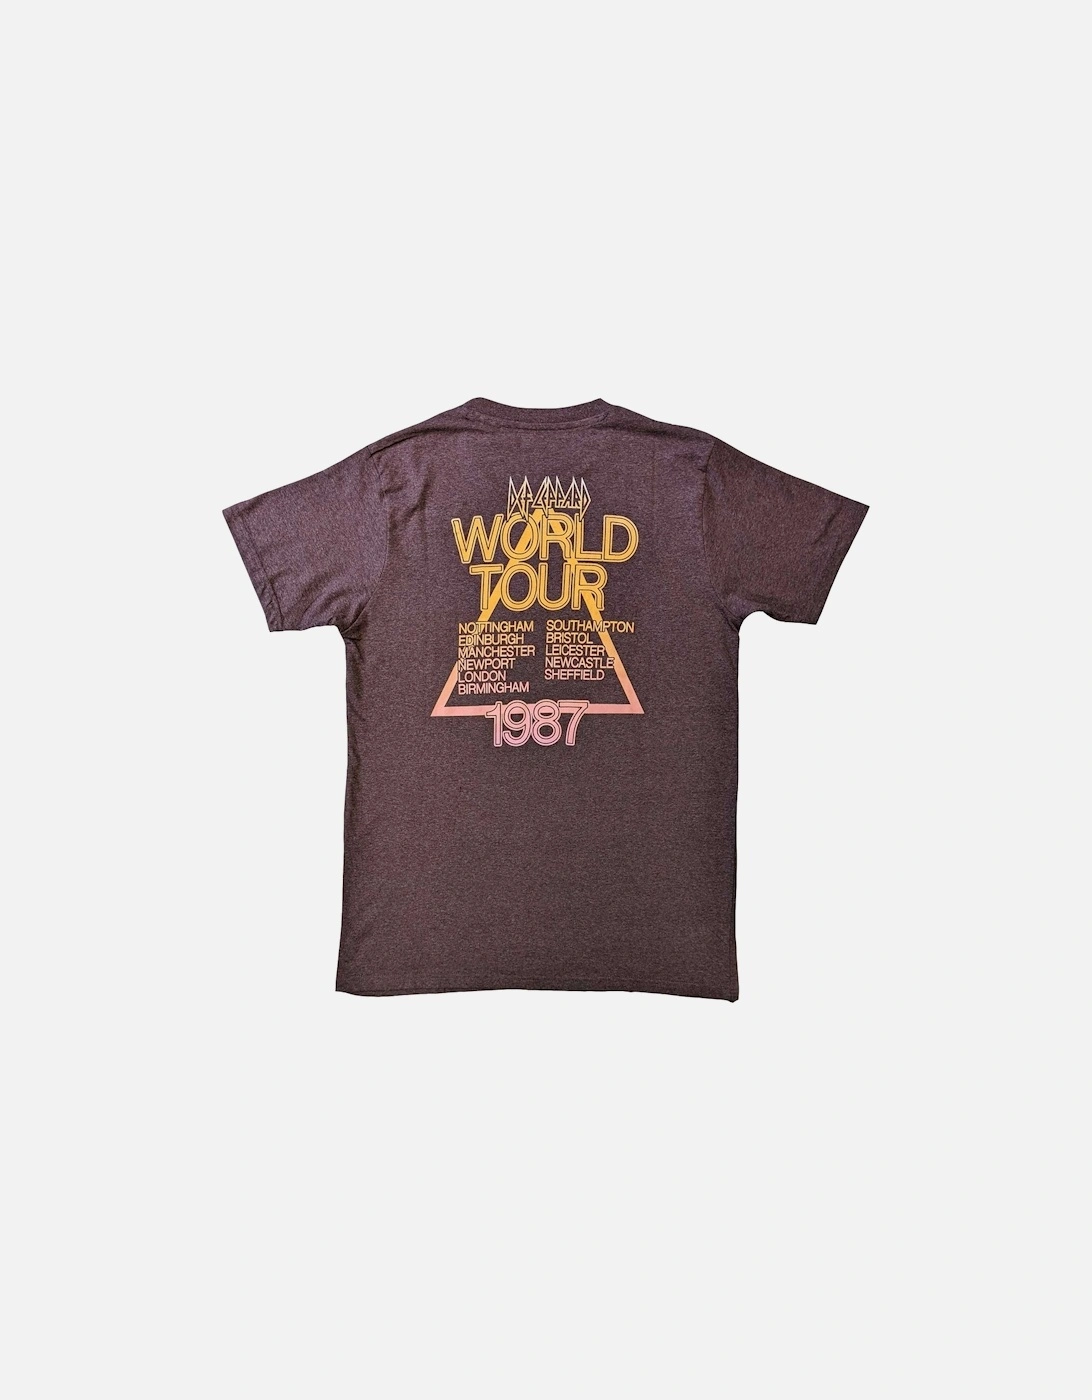 Unisex Adult Hysteria World Tour Back Print T-Shirt